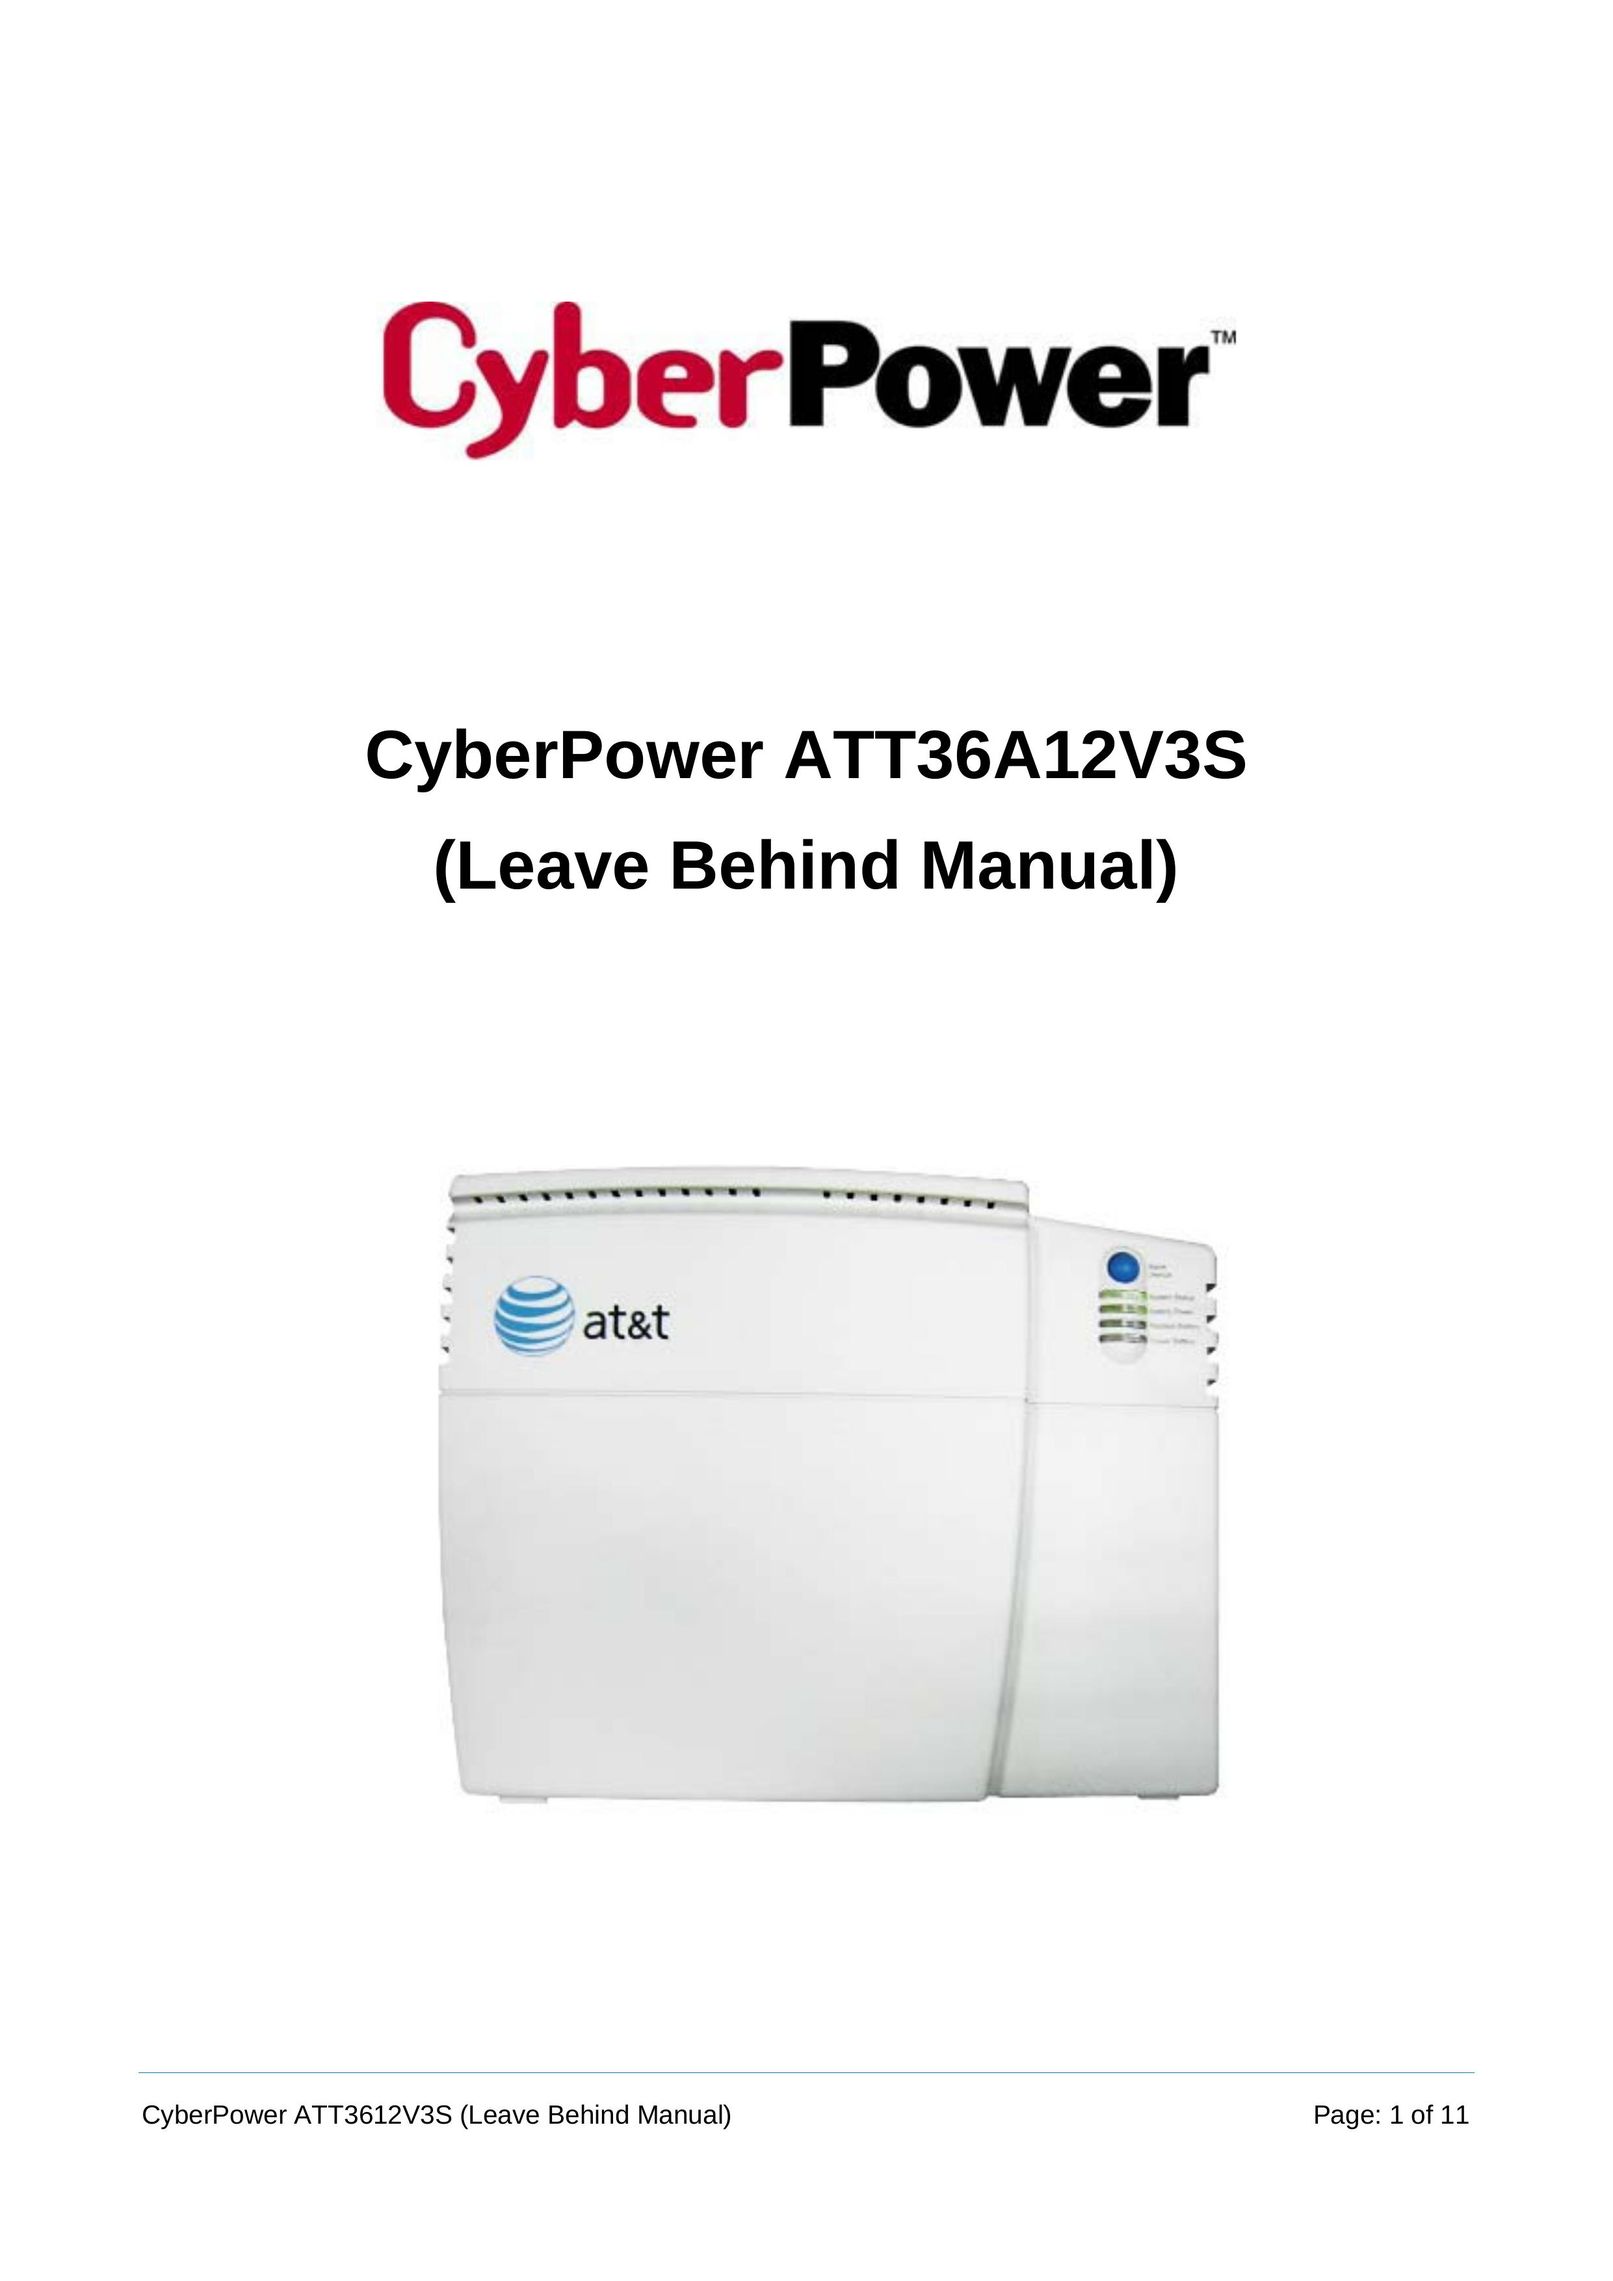 CyberPower ATT36A12V3S Power Supply User Manual